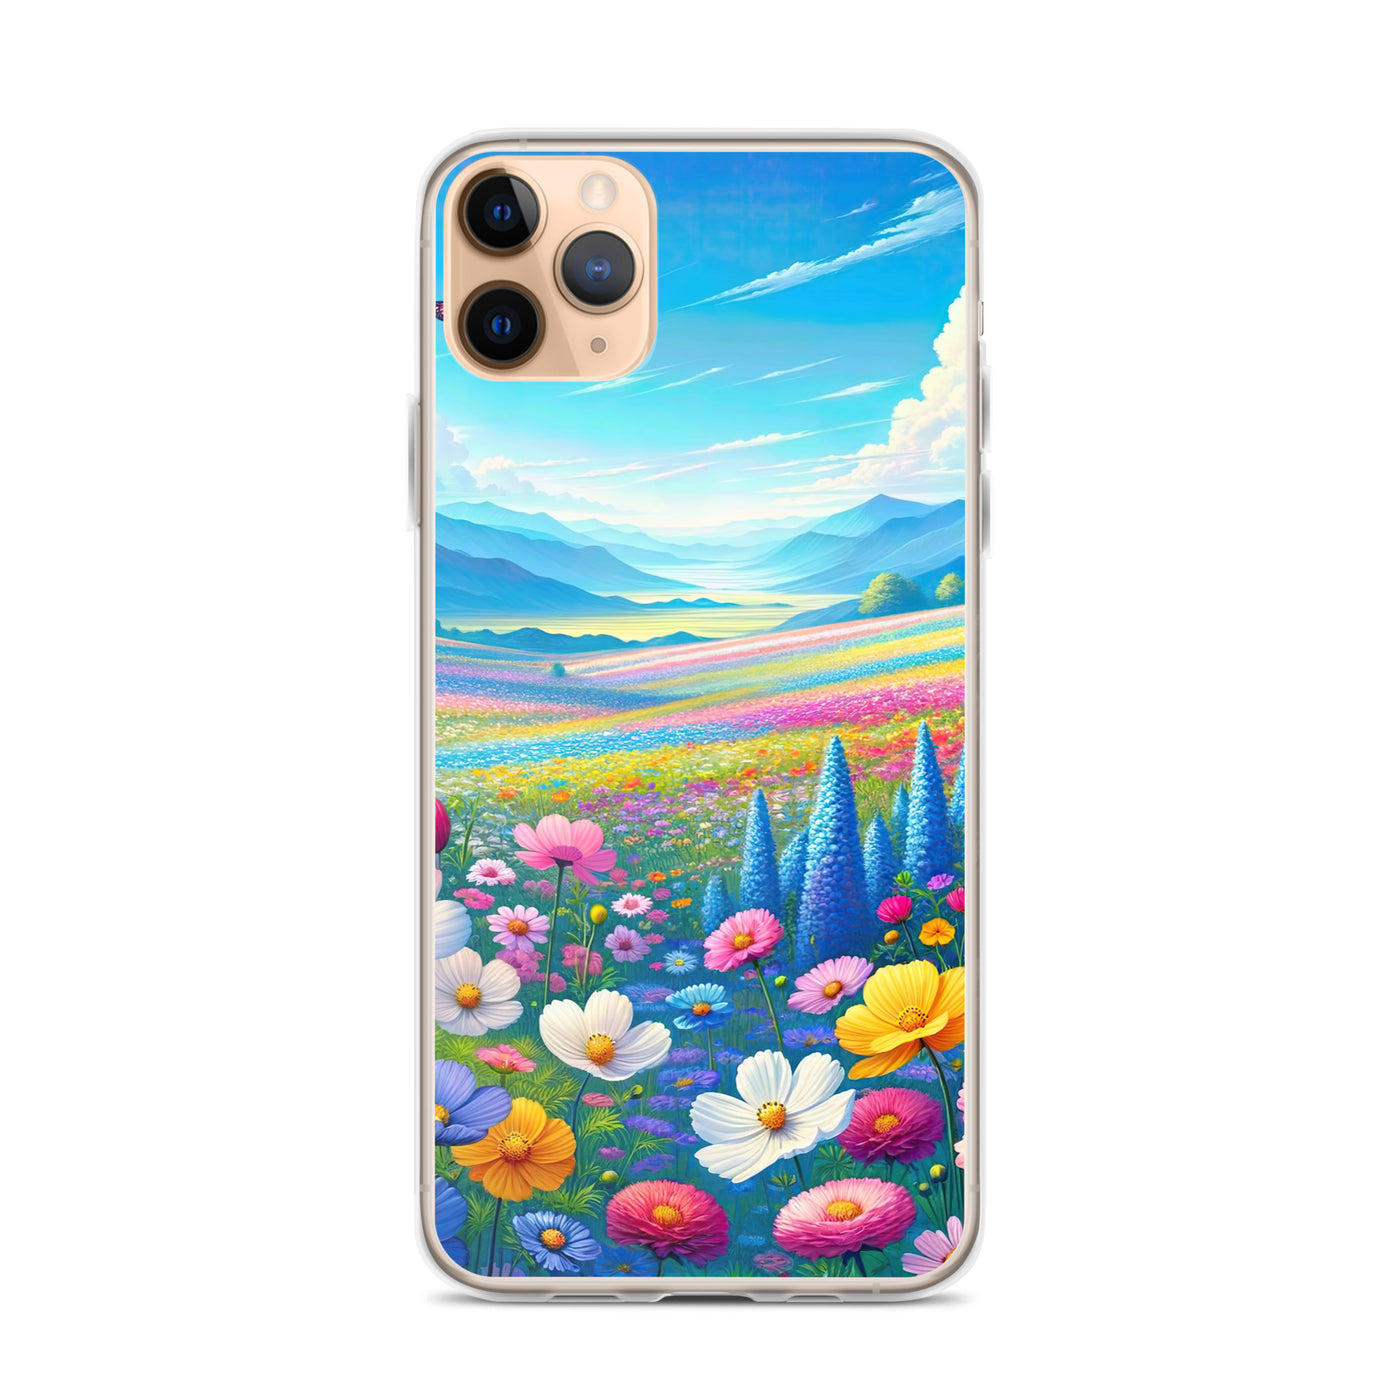 Weitläufiges Blumenfeld unter himmelblauem Himmel, leuchtende Flora - iPhone Schutzhülle (durchsichtig) camping xxx yyy zzz iPhone 11 Pro Max